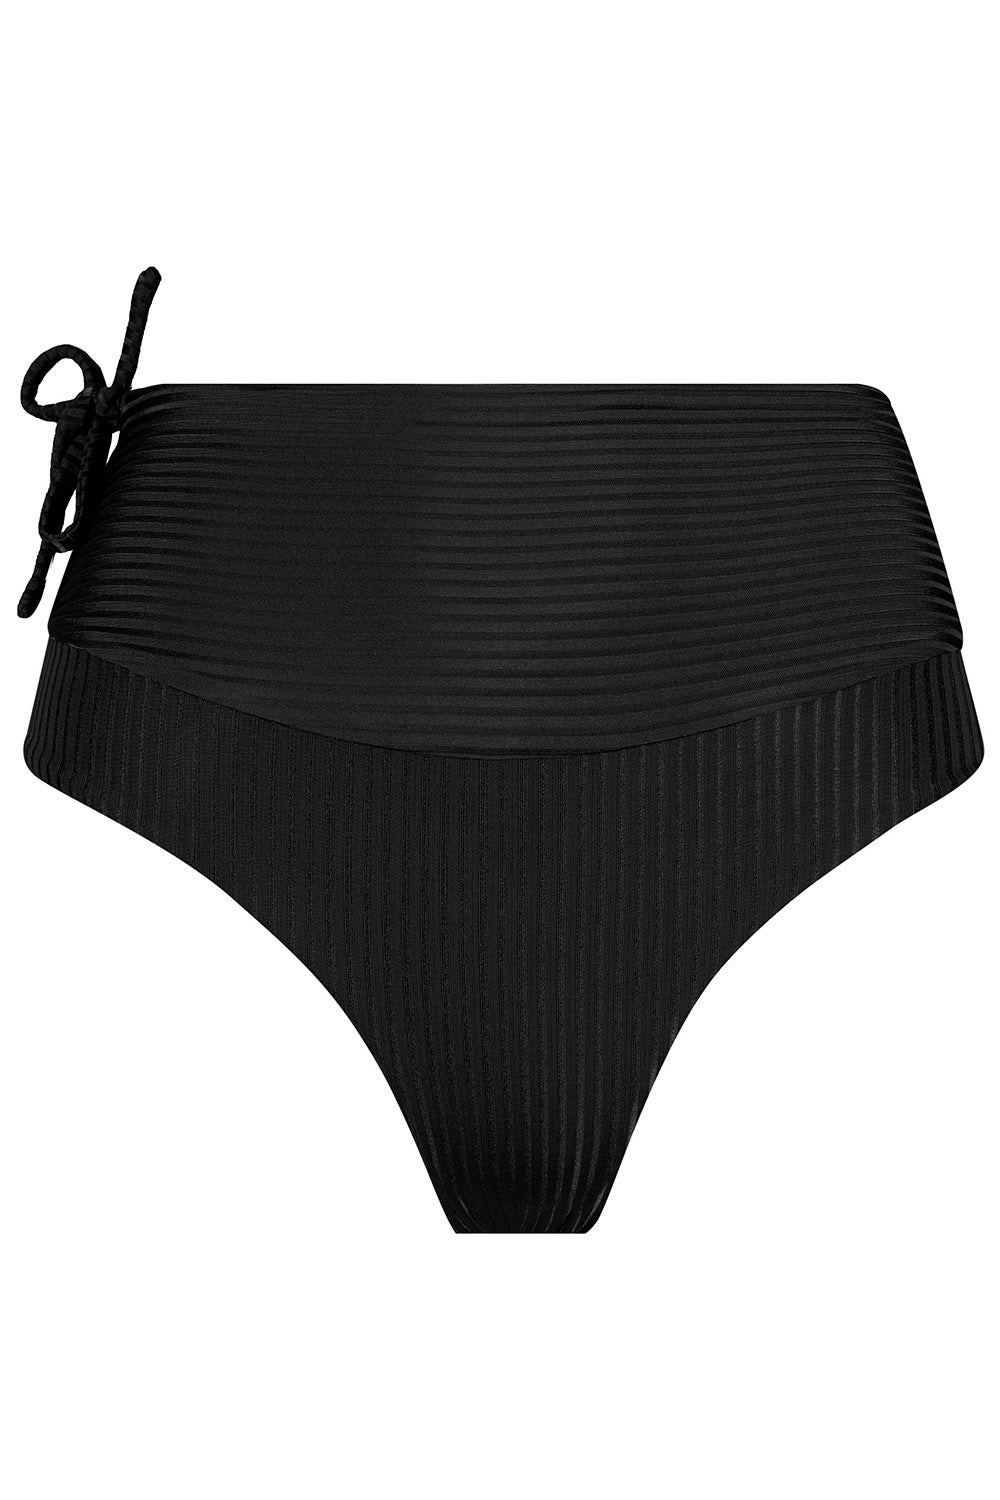 Knix Swim Ultra High Rise Bikini Bottom Shapping Slimming SZ 3XL Black  NWT!!